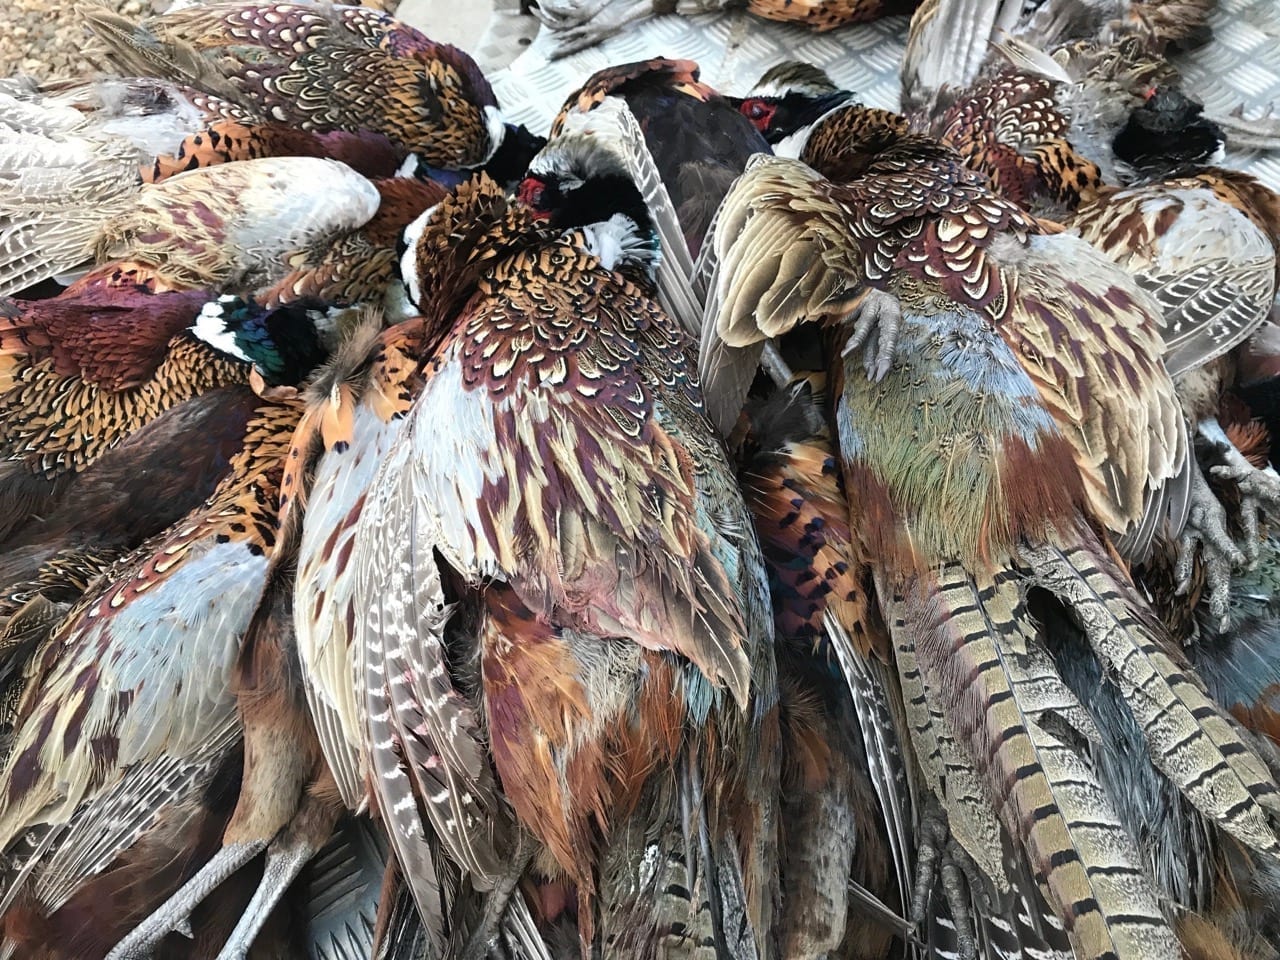 Pheasant hunting guides